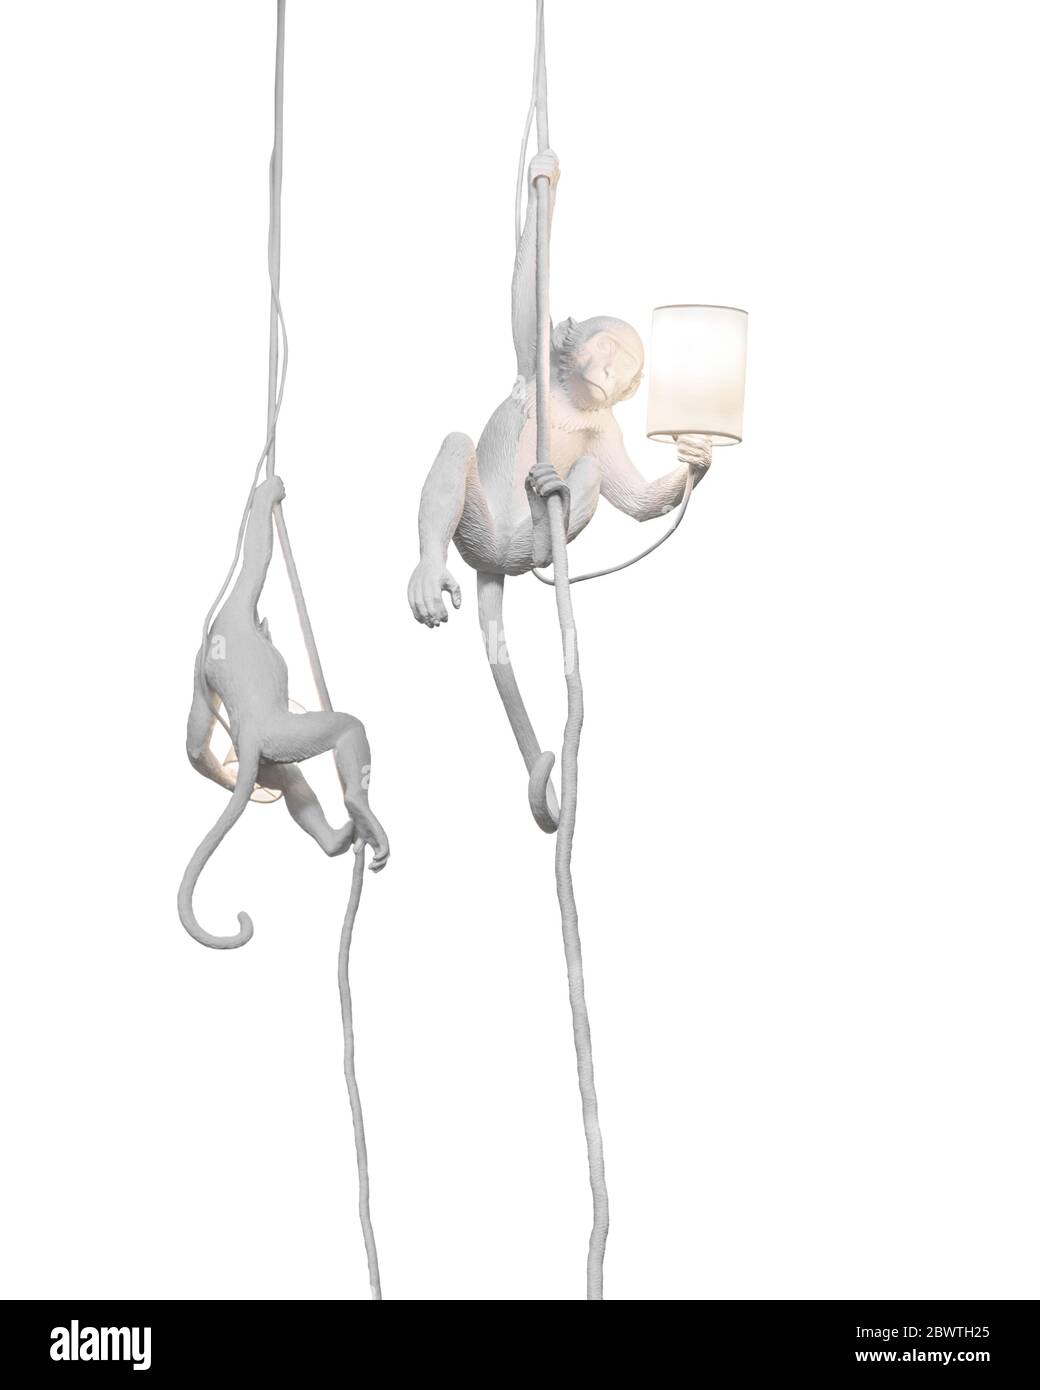 Pendant decorative lamps with white monkey isolated on white background. Stock Photo